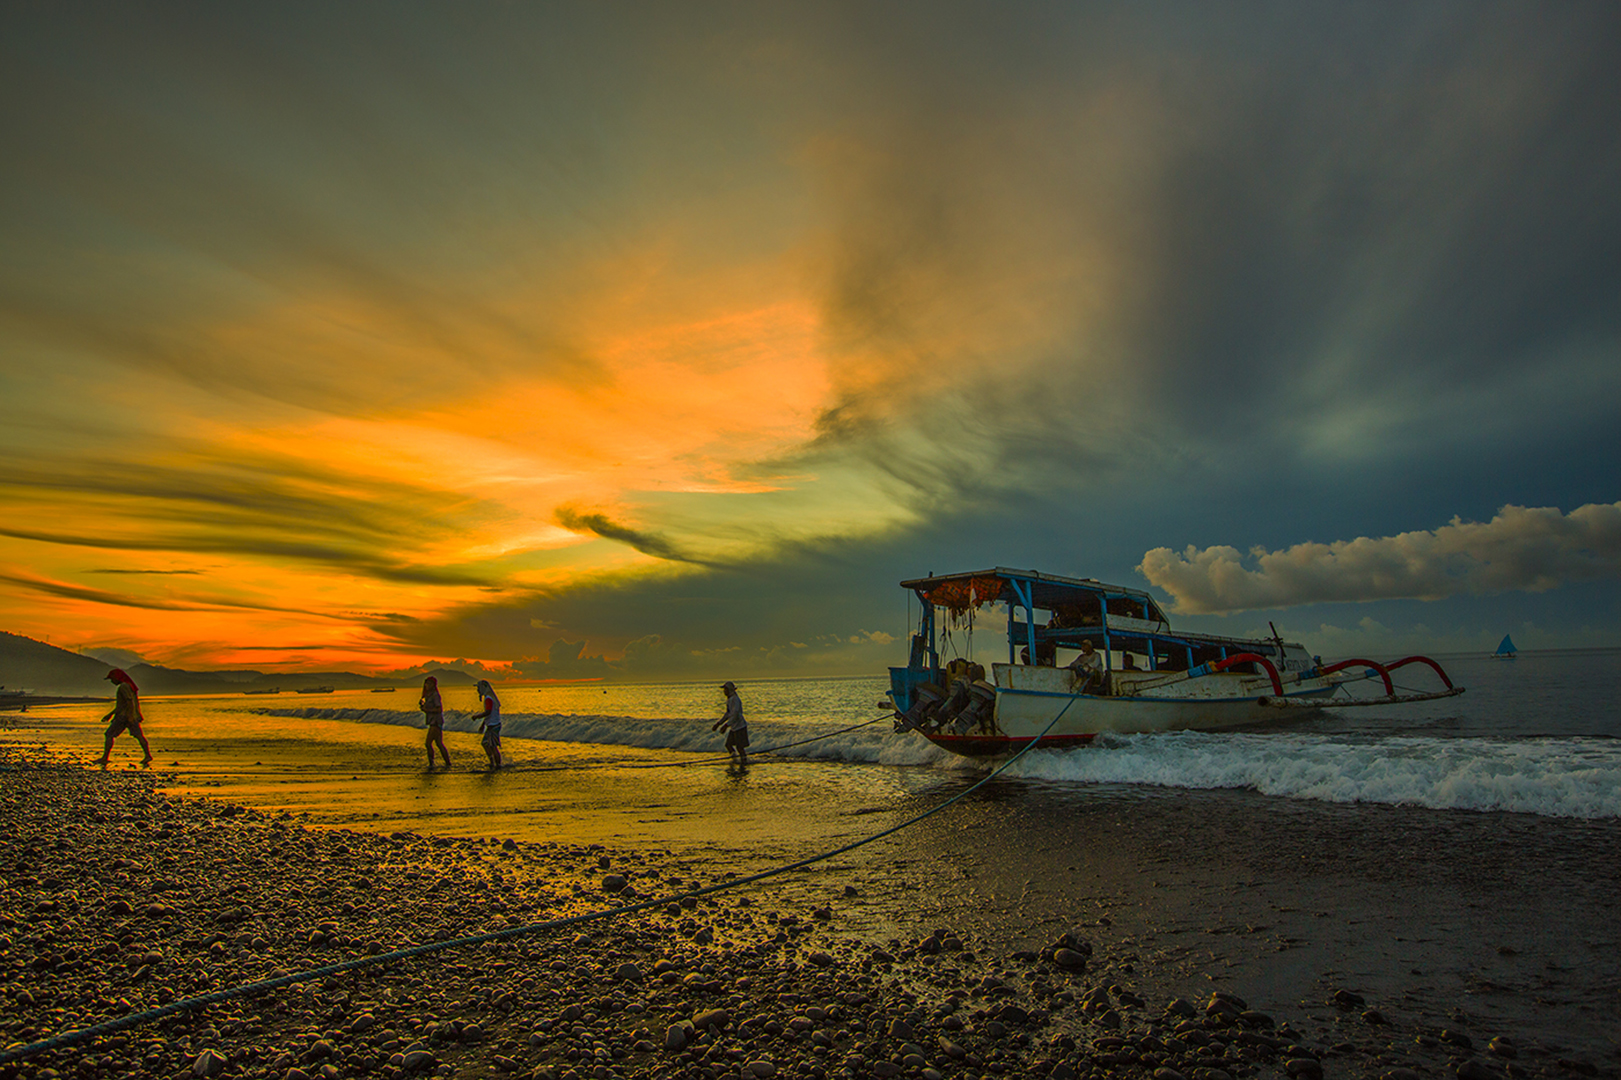 Sunrise at Bali Beach